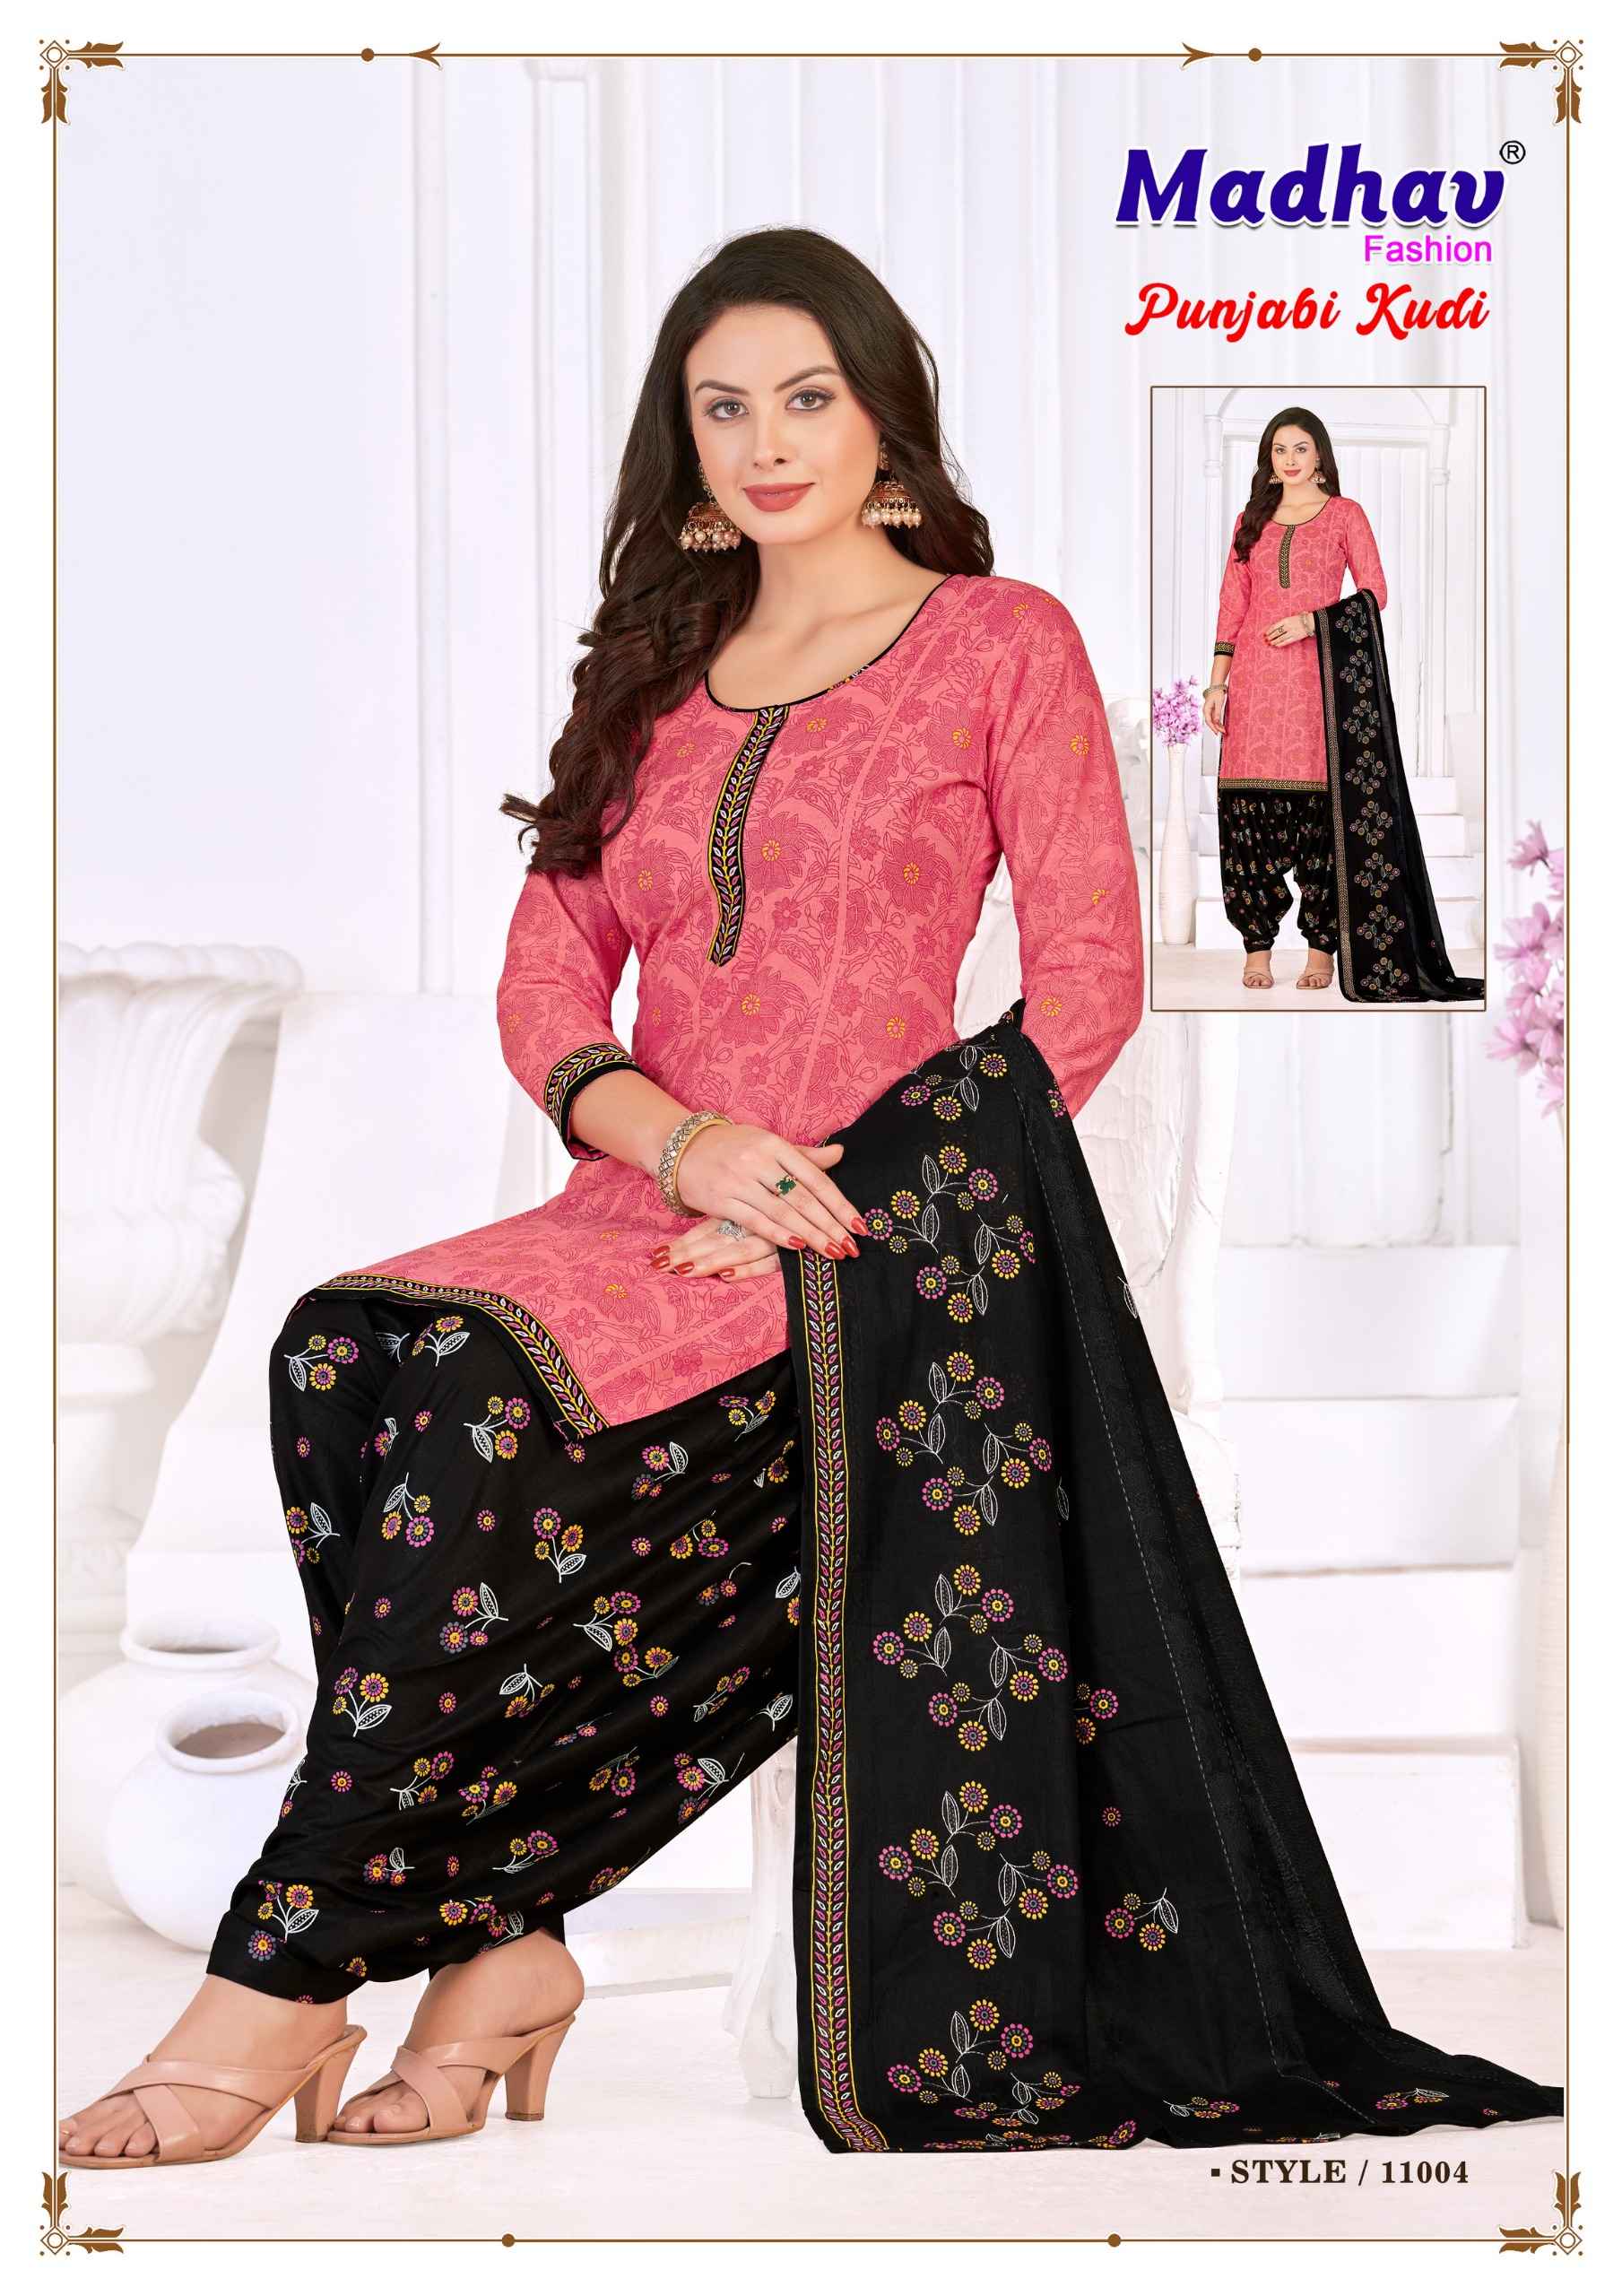 Madhav Fashion Punjabi Kudi Vol 11 Cotton Dress Material 10 pcs Catalogue